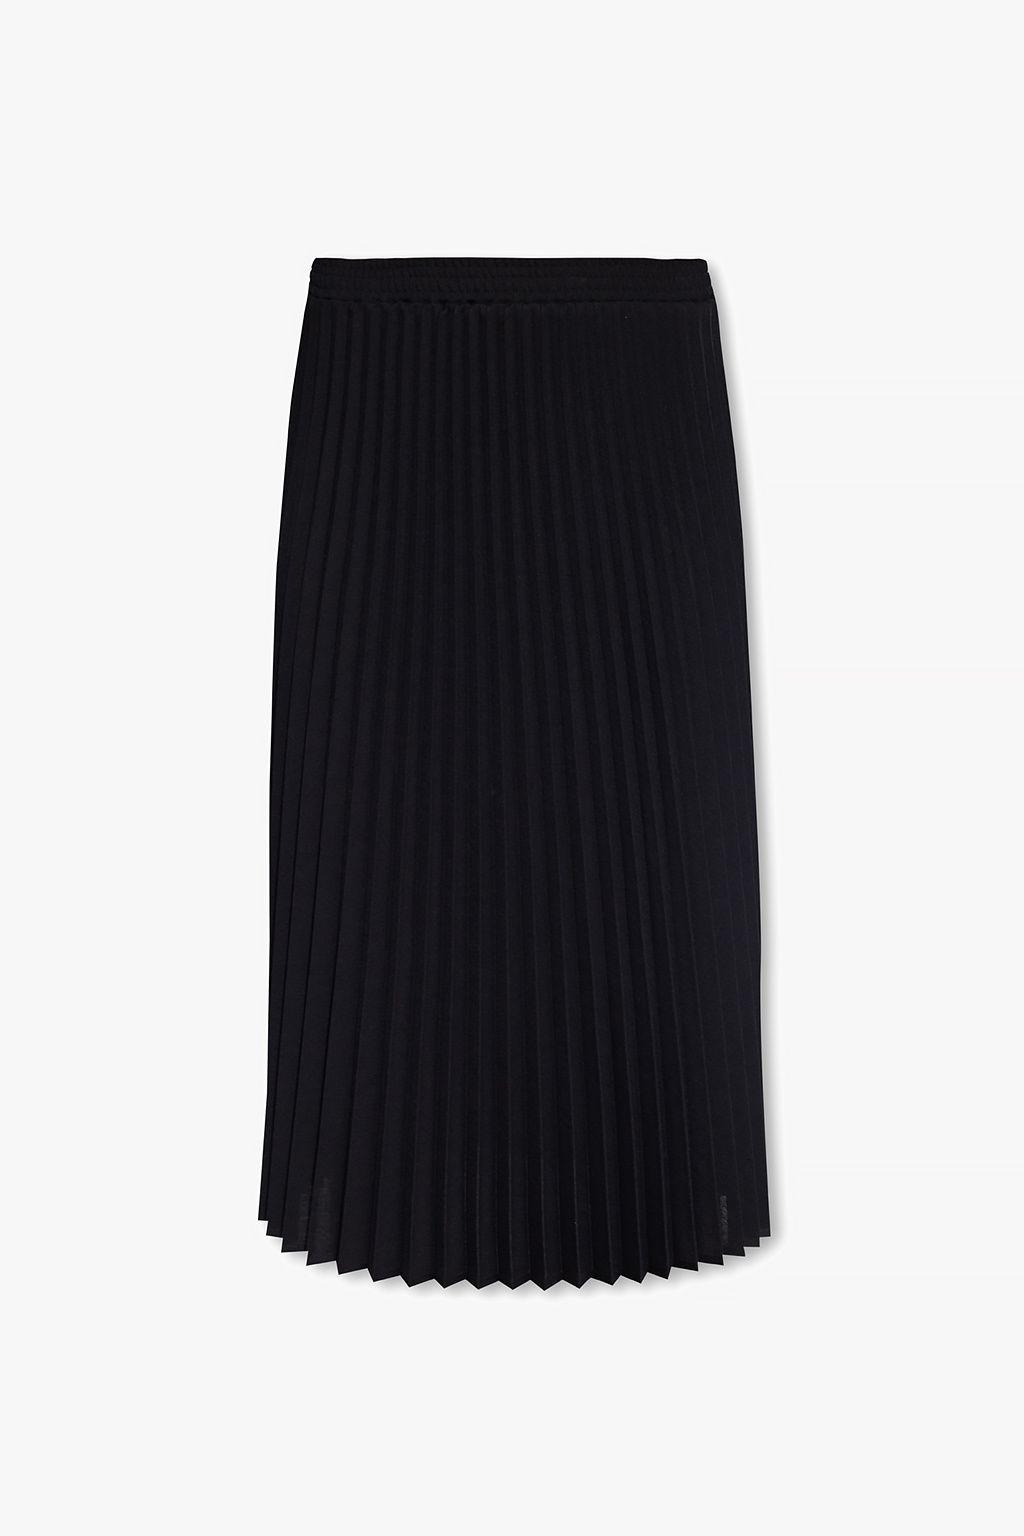 Vetements Black Pleated Skirt | Lyst